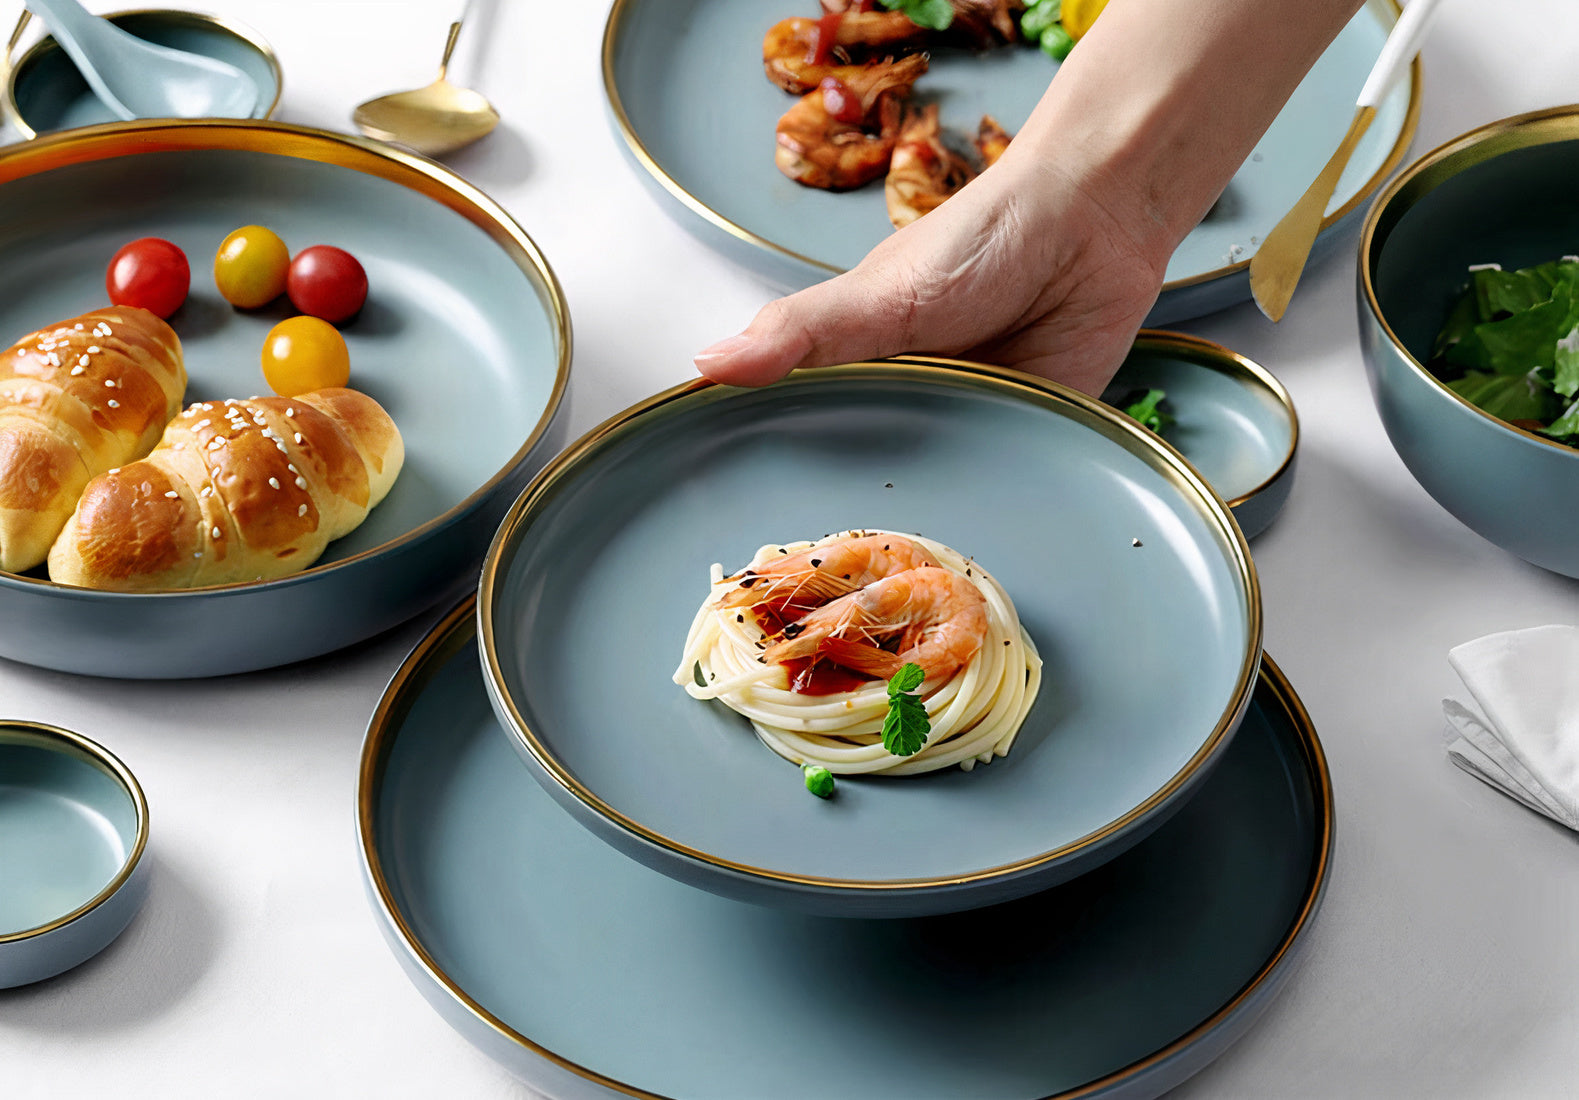 Emerald Green Gold Trim Ceramic Dinnerware – ModernSpaceLiving